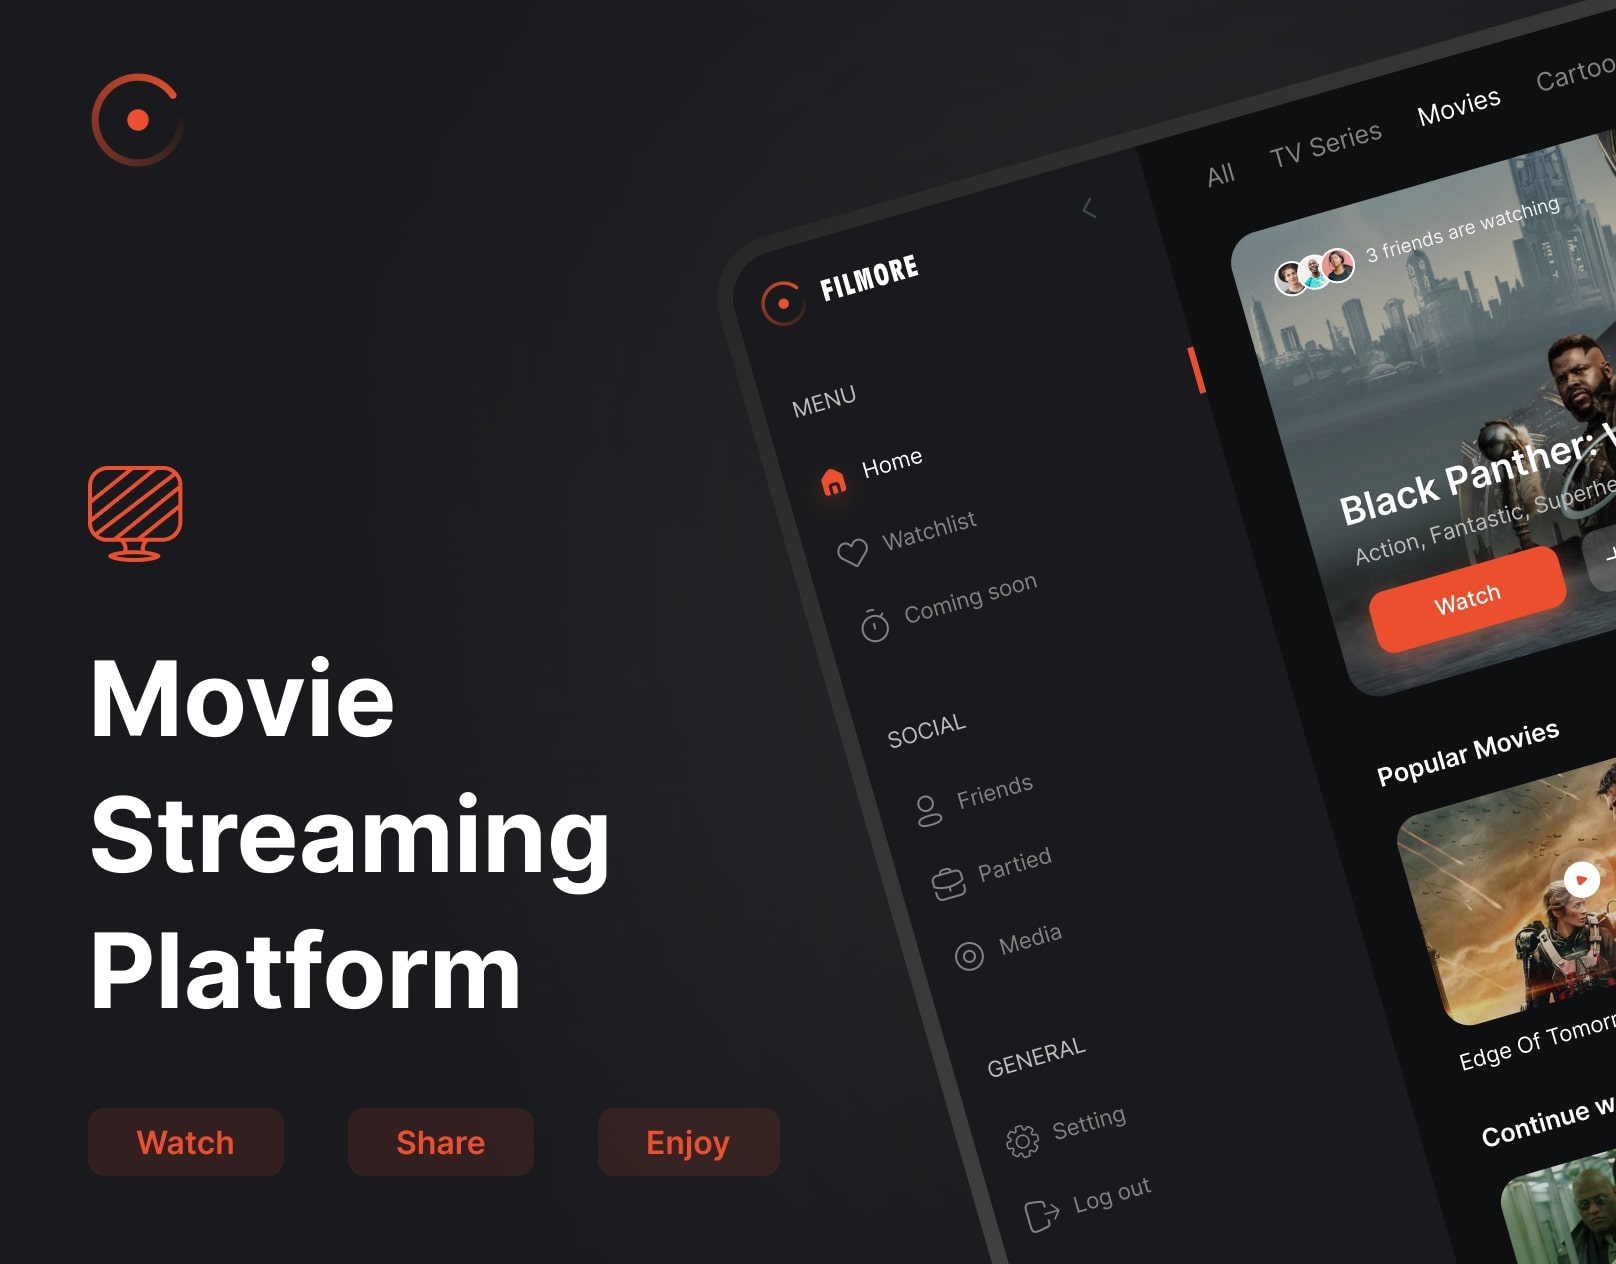 Filmore - Streaming platform